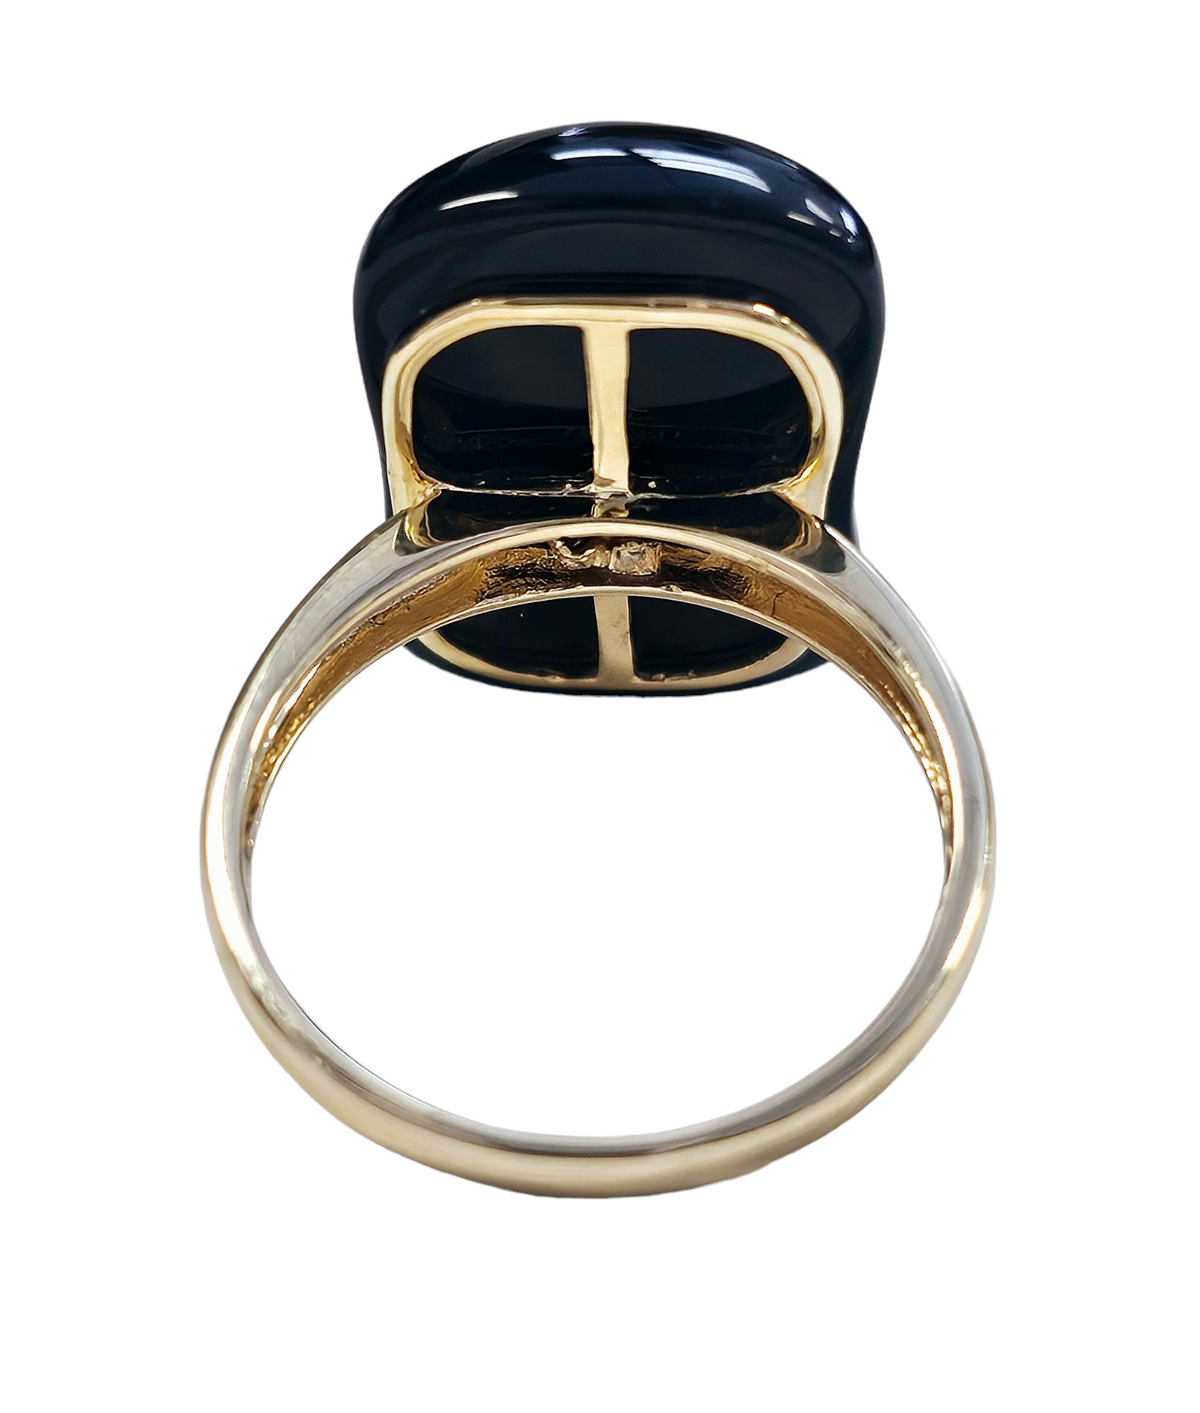 Asian Symbol Set on Cabochon Black Onyx Ring made in 14-Karat Yellow Gold